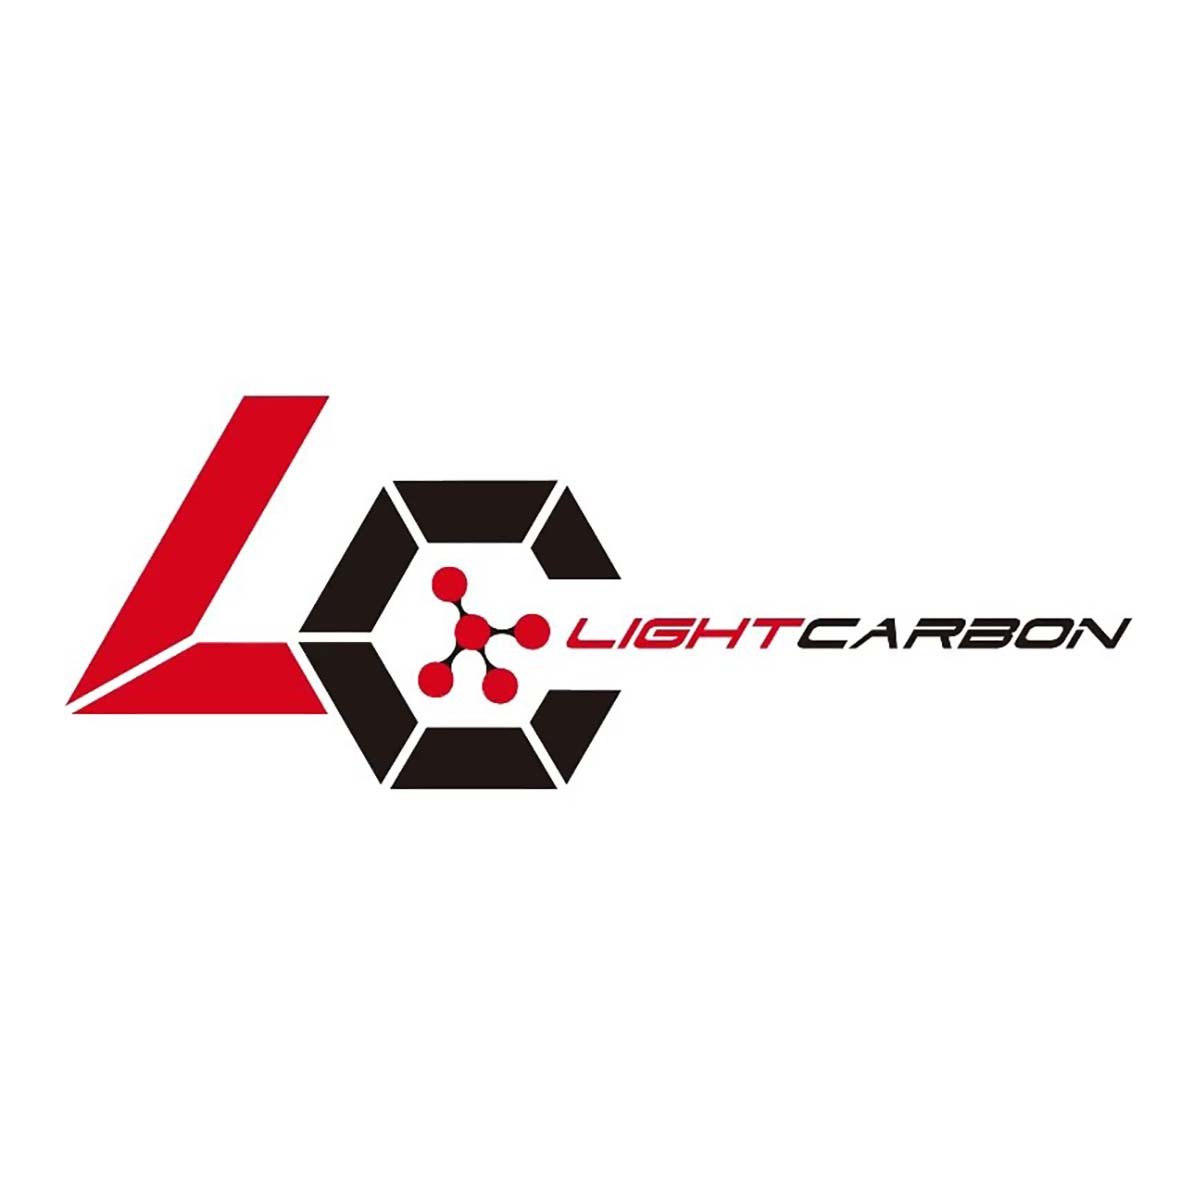 lightcarbon.jpg